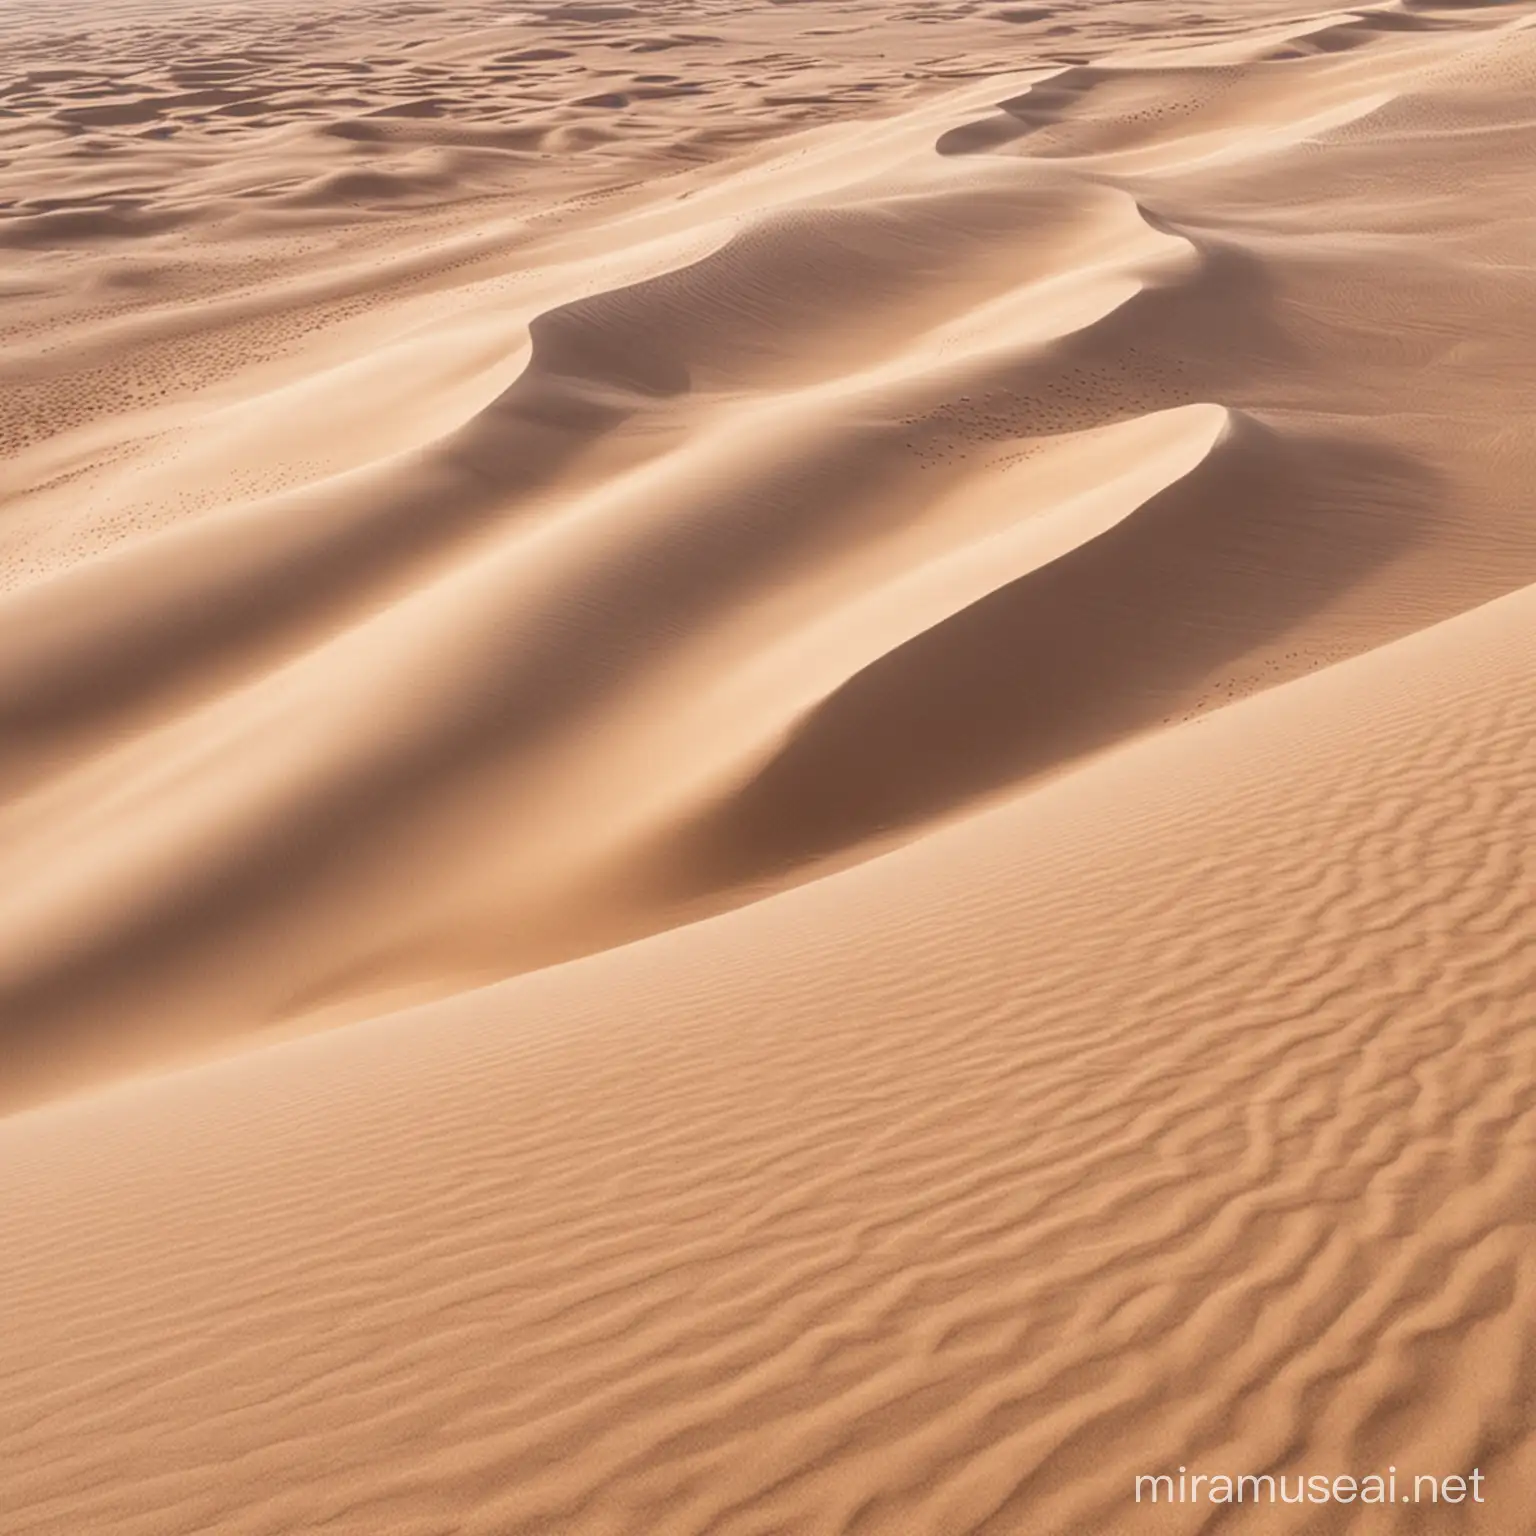 Vast Desert Landscape with Majestic Sand Dunes